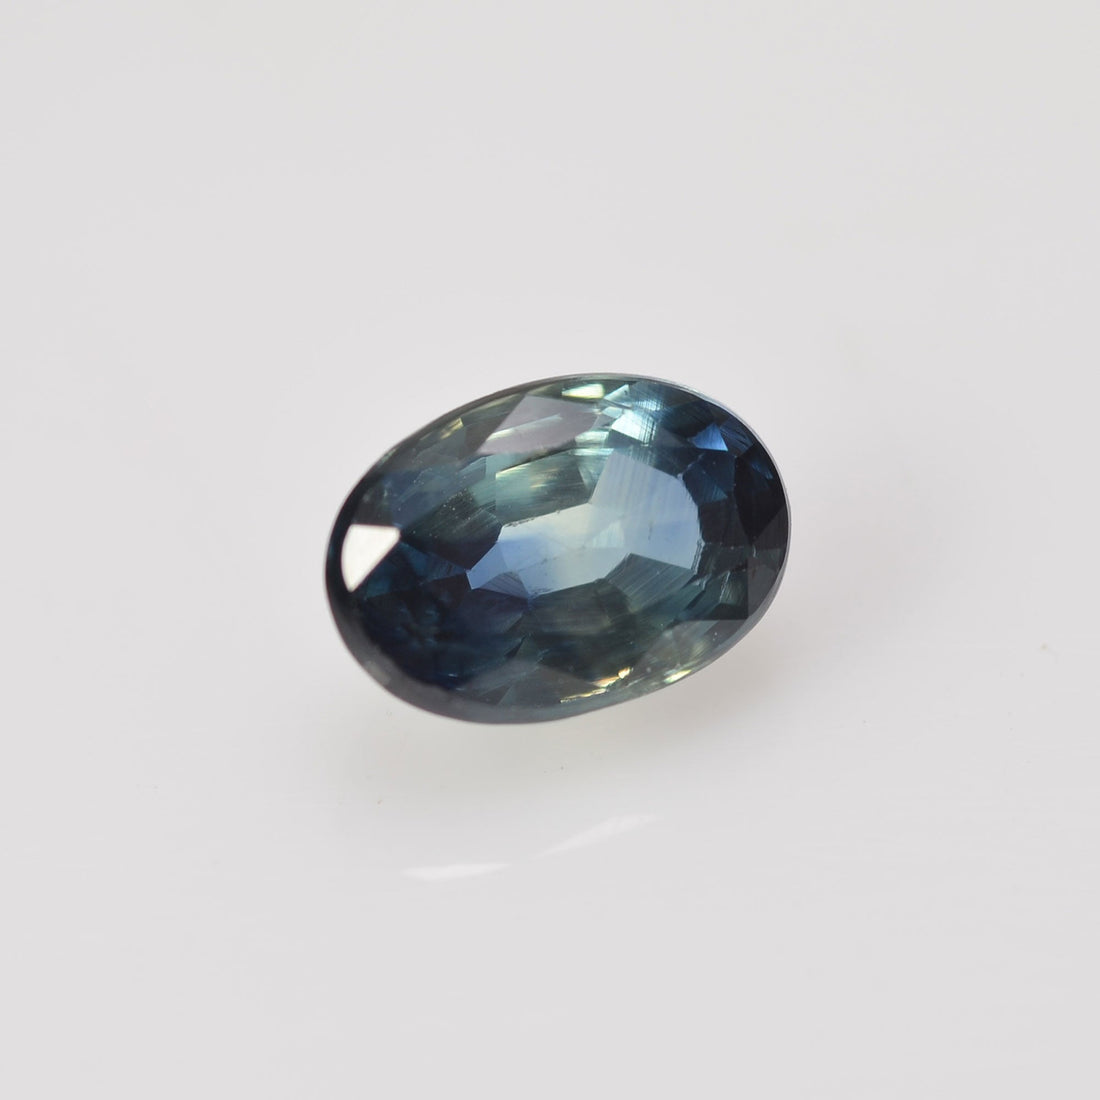 0.75 cts Natural Blue Green Teal Sapphire Loose Gemstone Oval Cut - Thai Gems Export Ltd.